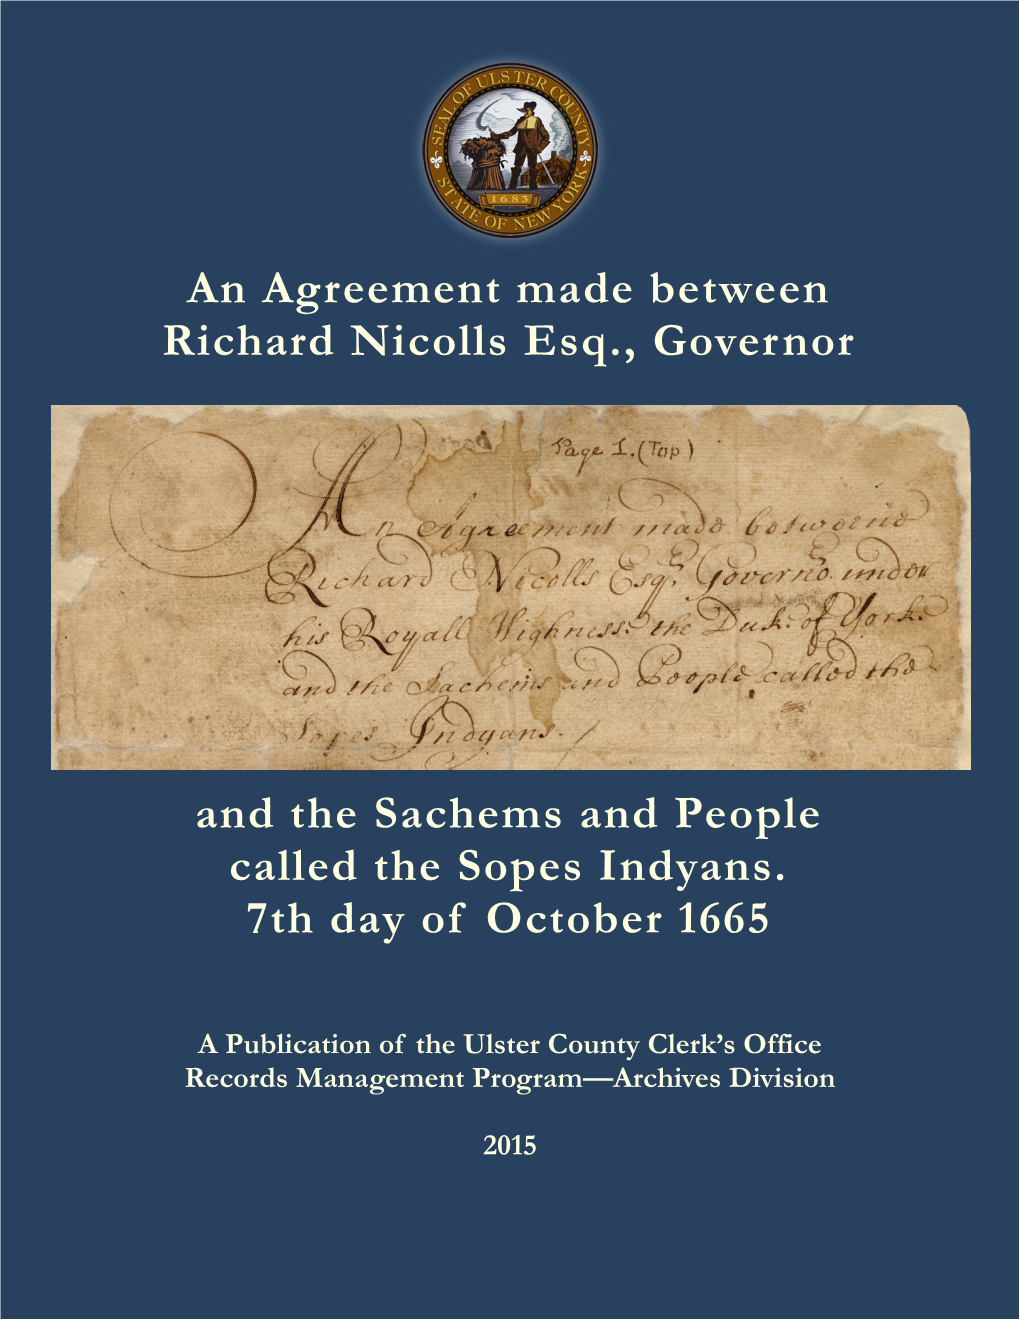 Nicolls/Esopus Peace Treaty of 1665